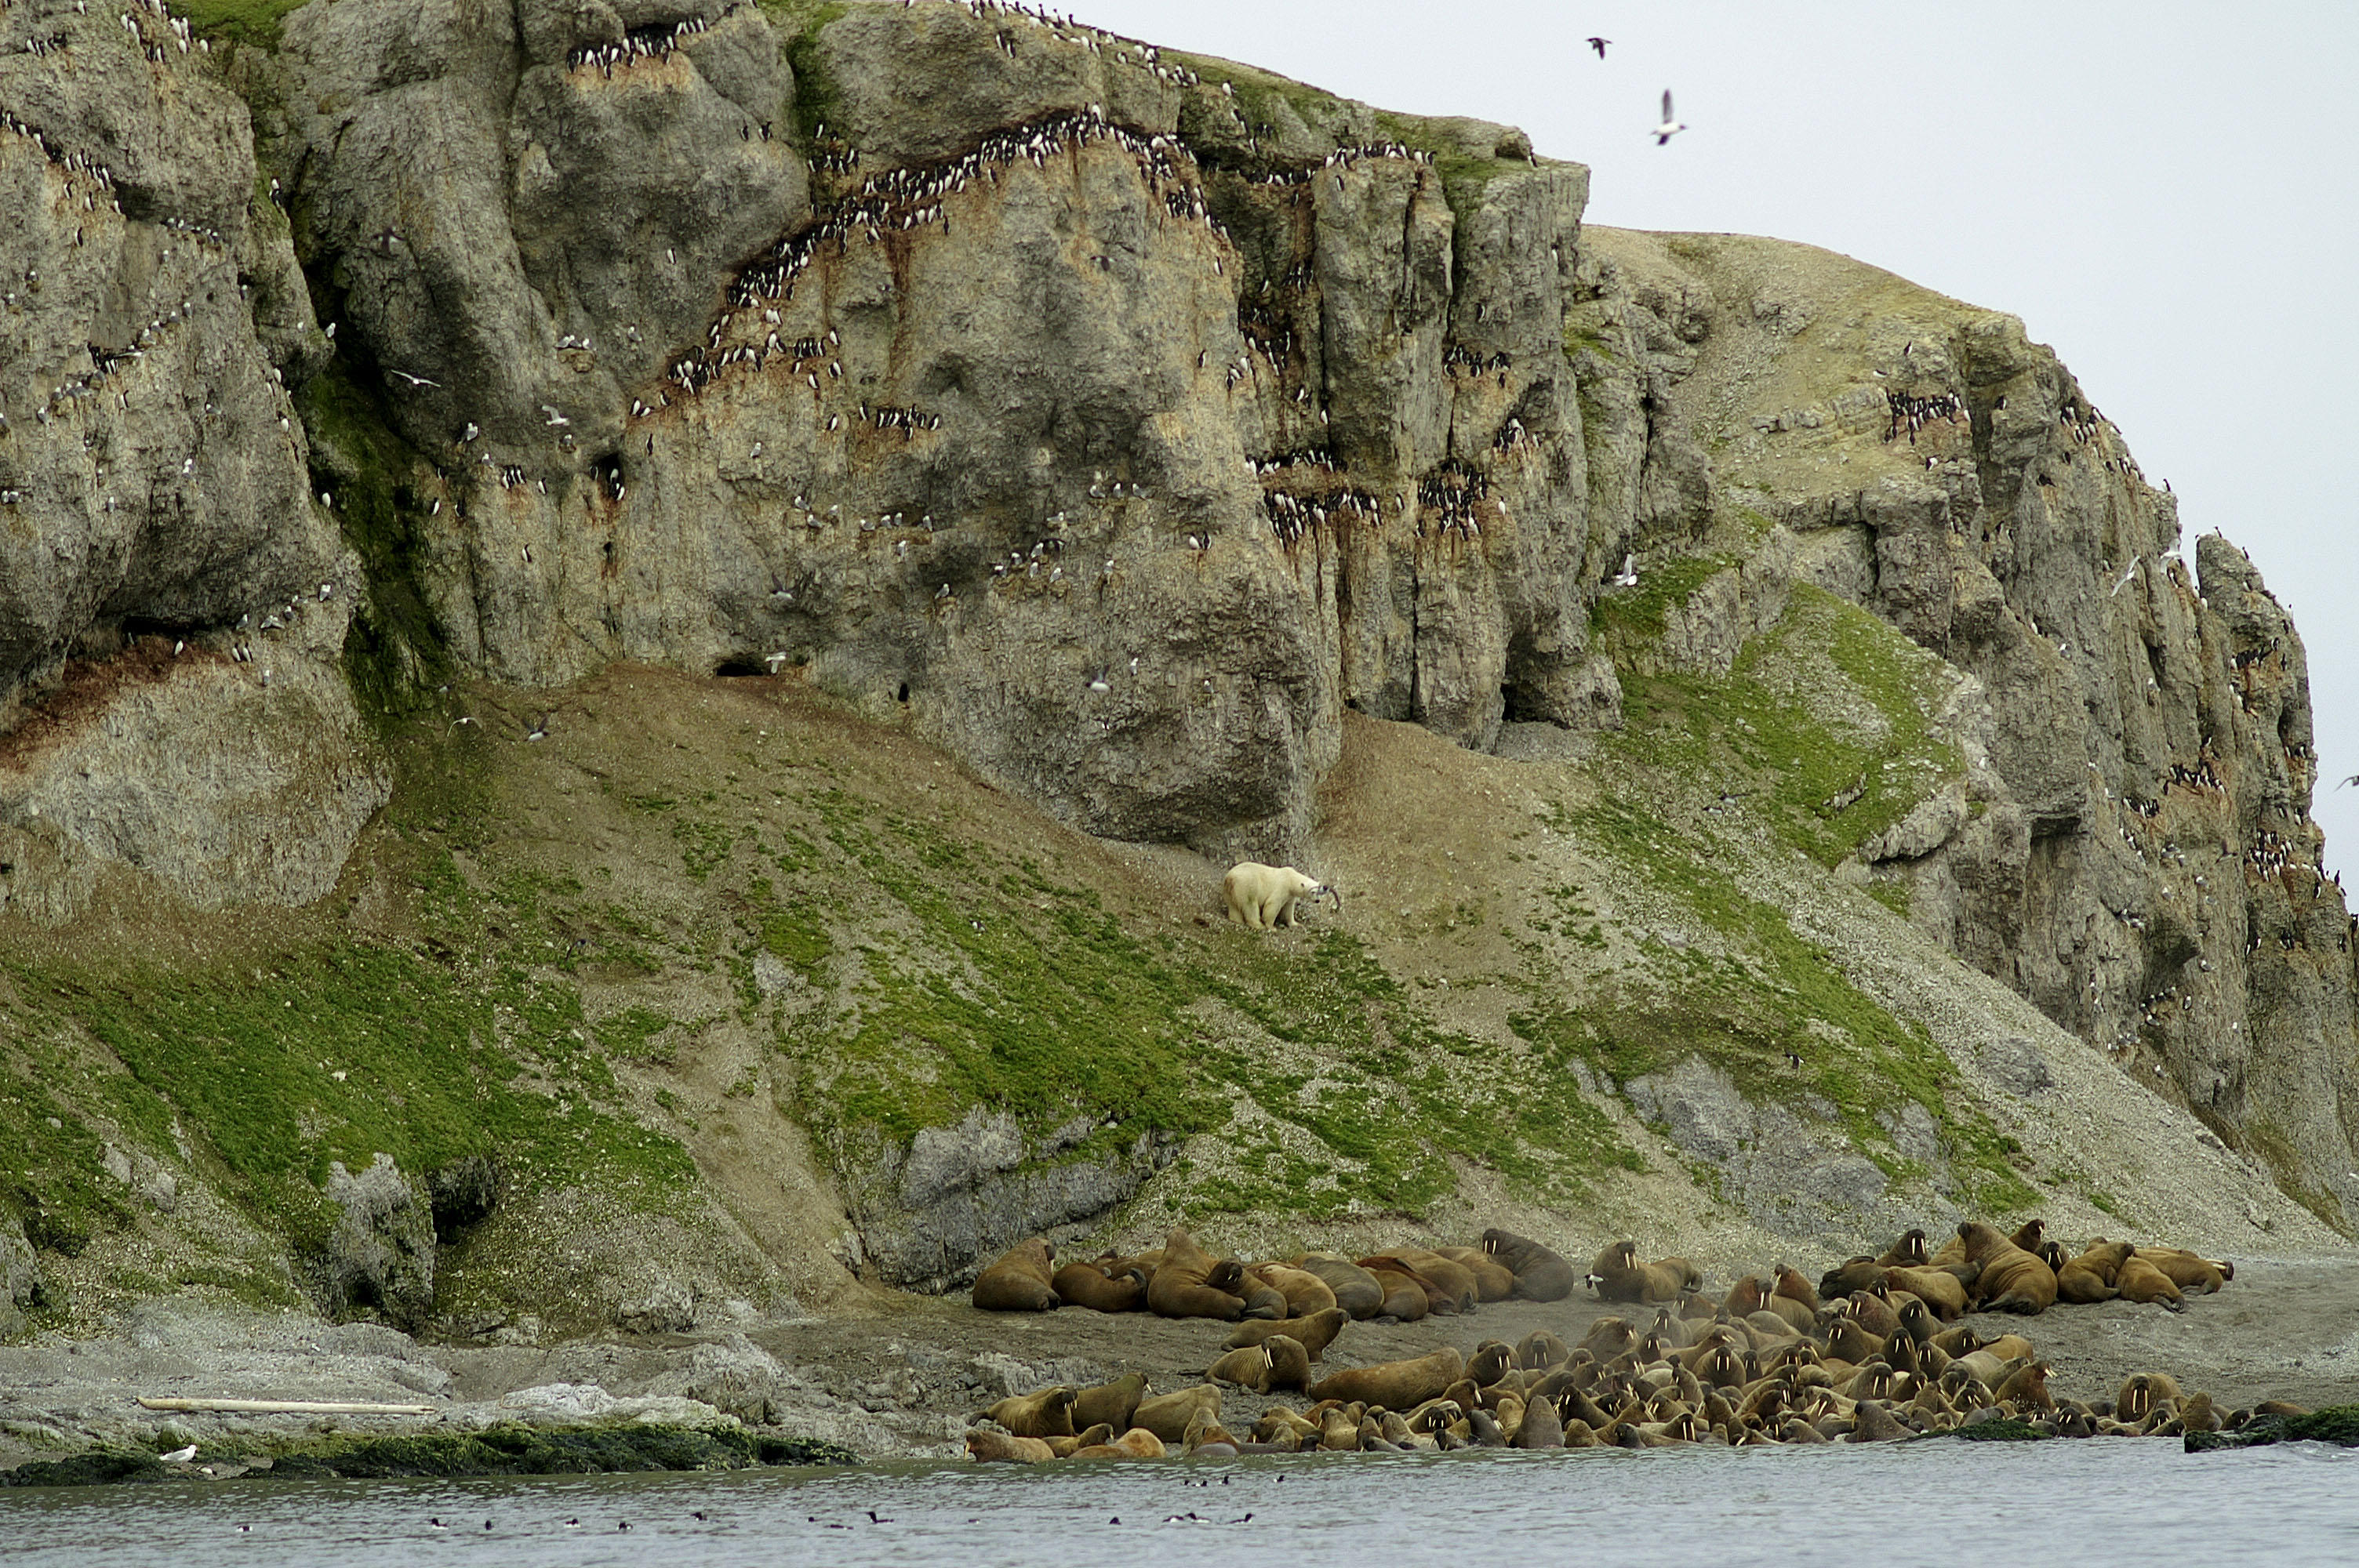 Polarbear and Walrusses on Oranskiy Island